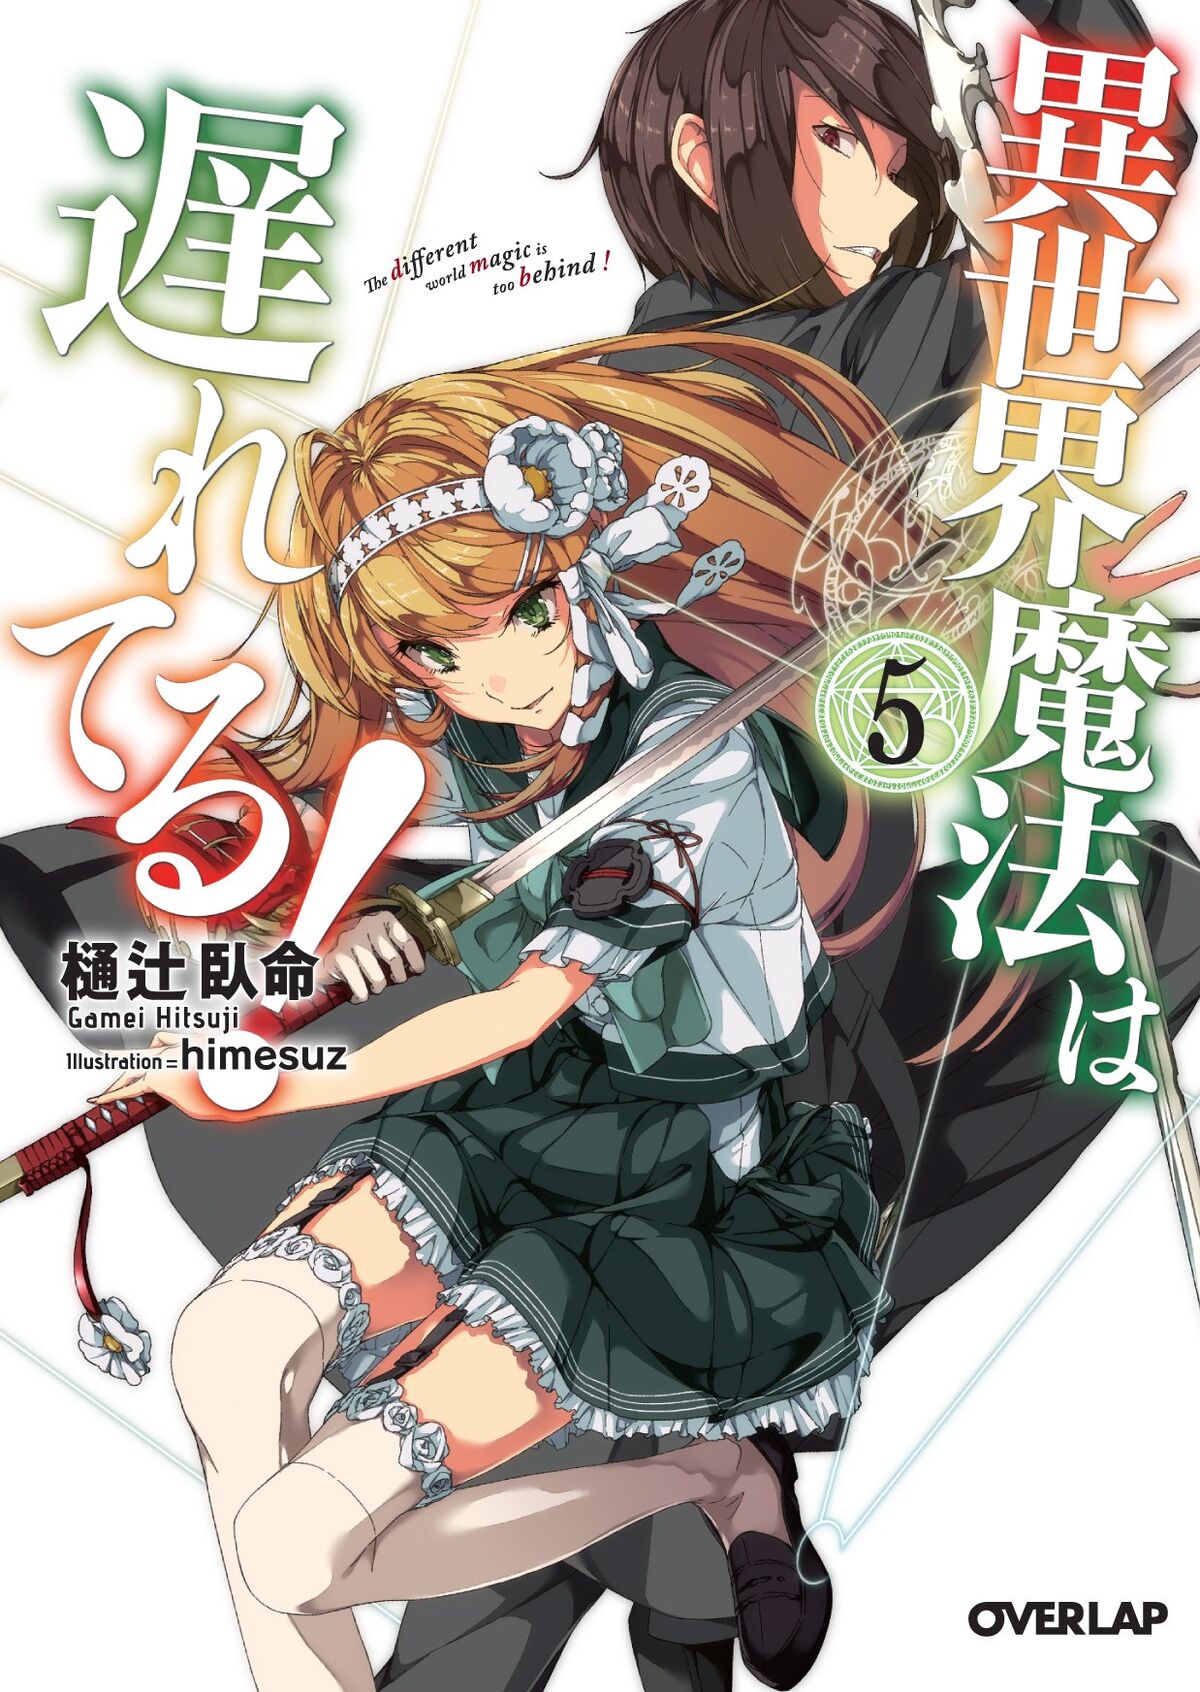 Light Novel Volume 5, Isekai Shokudō Wiki